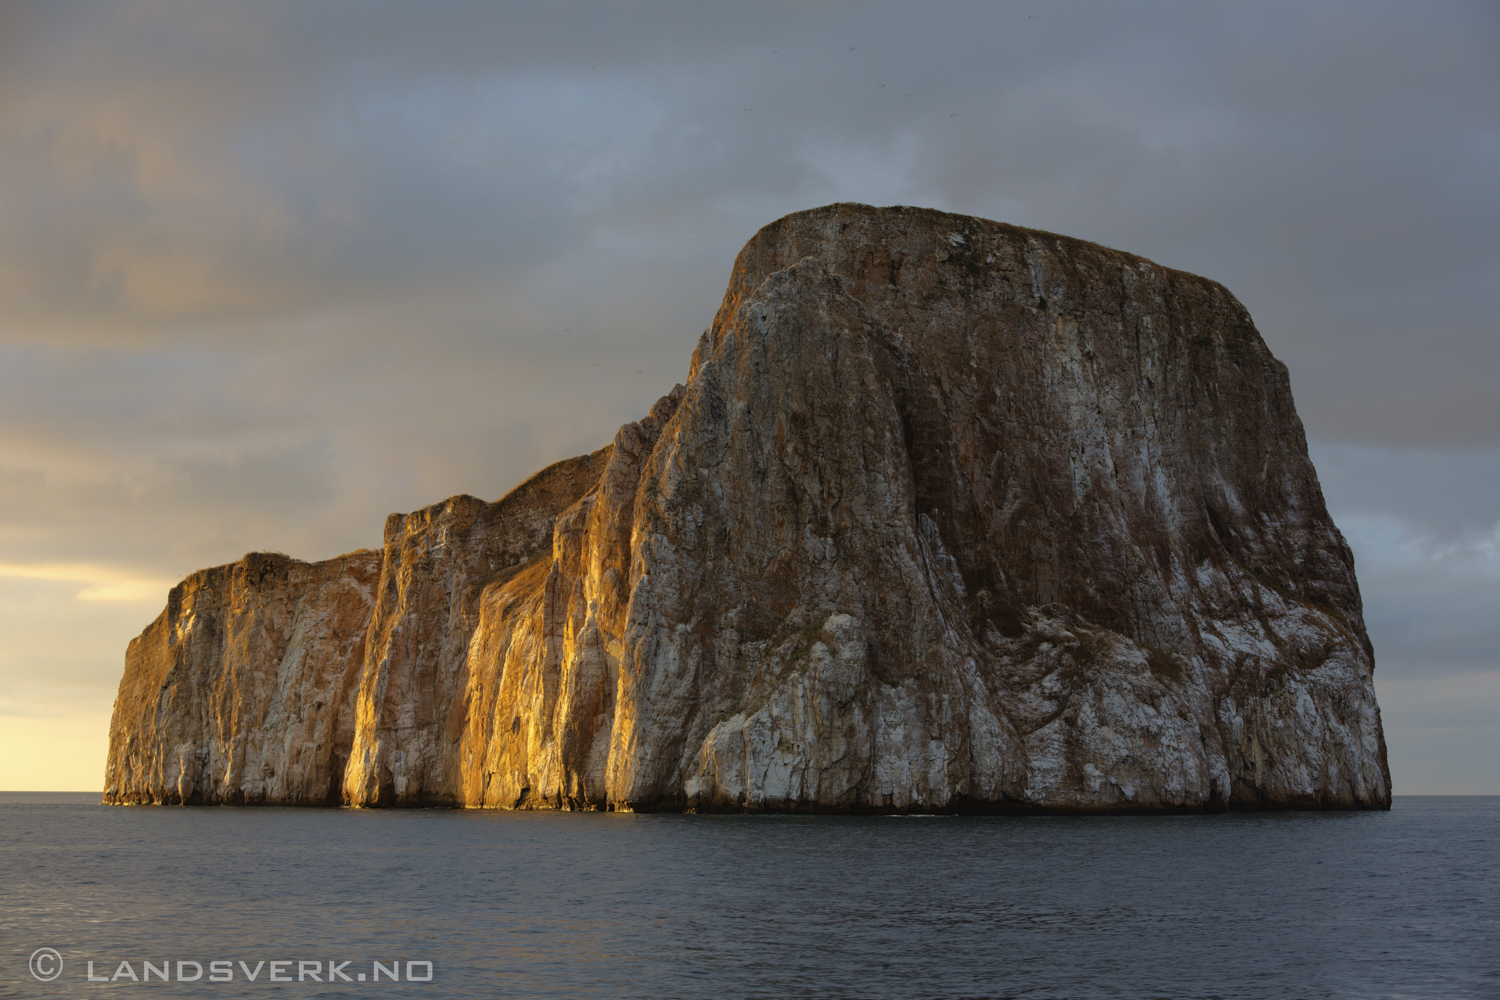 Leon Dormido, San Cristobal, Galapagos. Shark reef! 

(Canon EOS 5D Mark III / Canon EF 70-200mm f/2.8 L IS II USM)